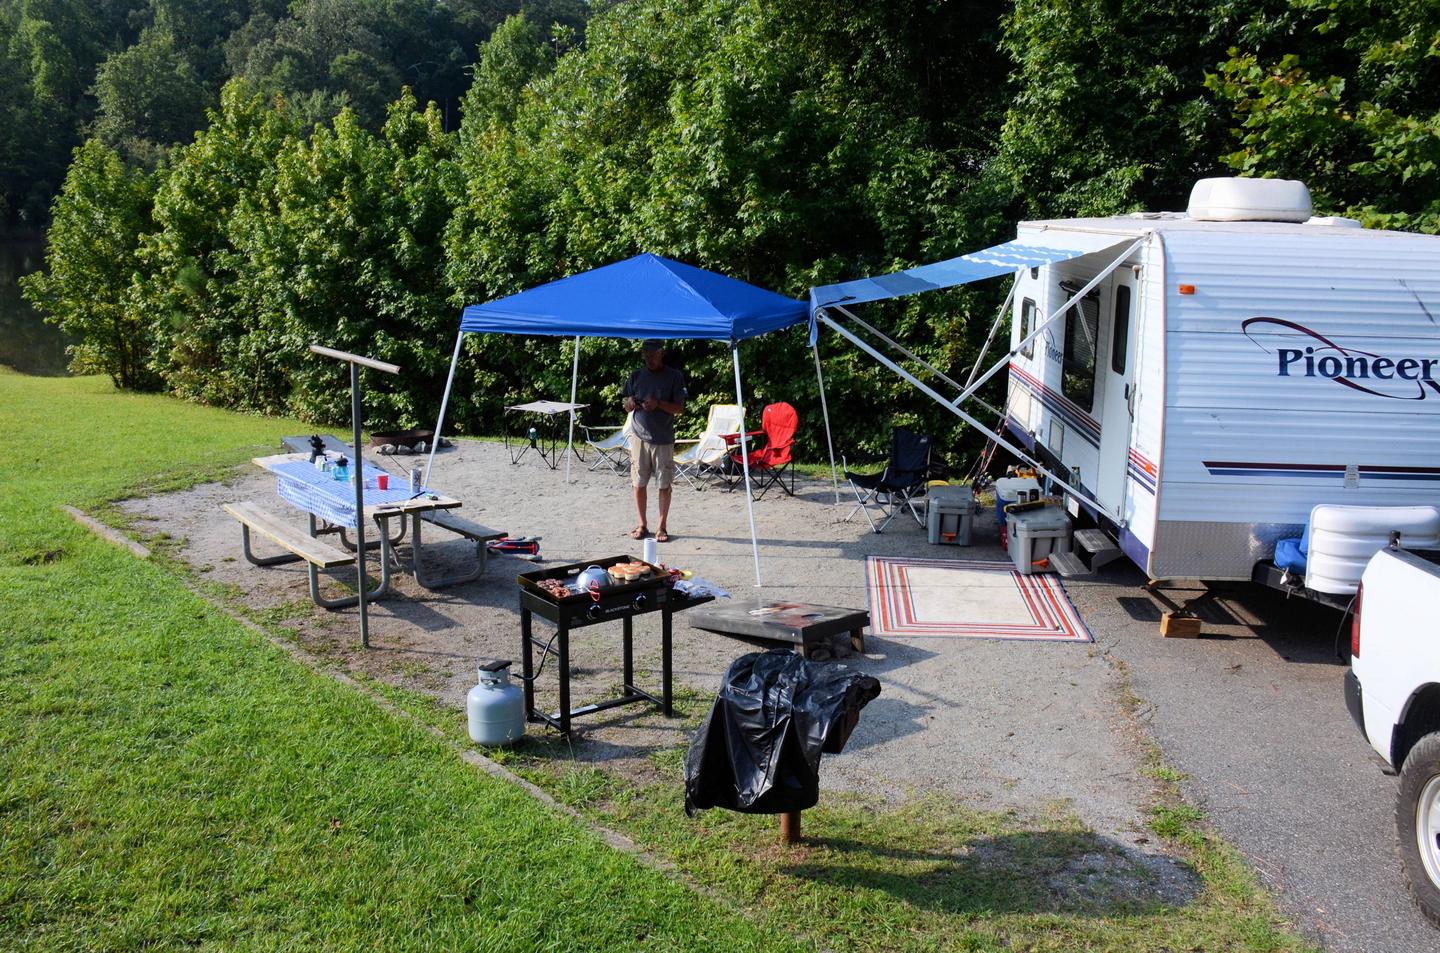 Campsite view.Payne Campground, campsite 12.